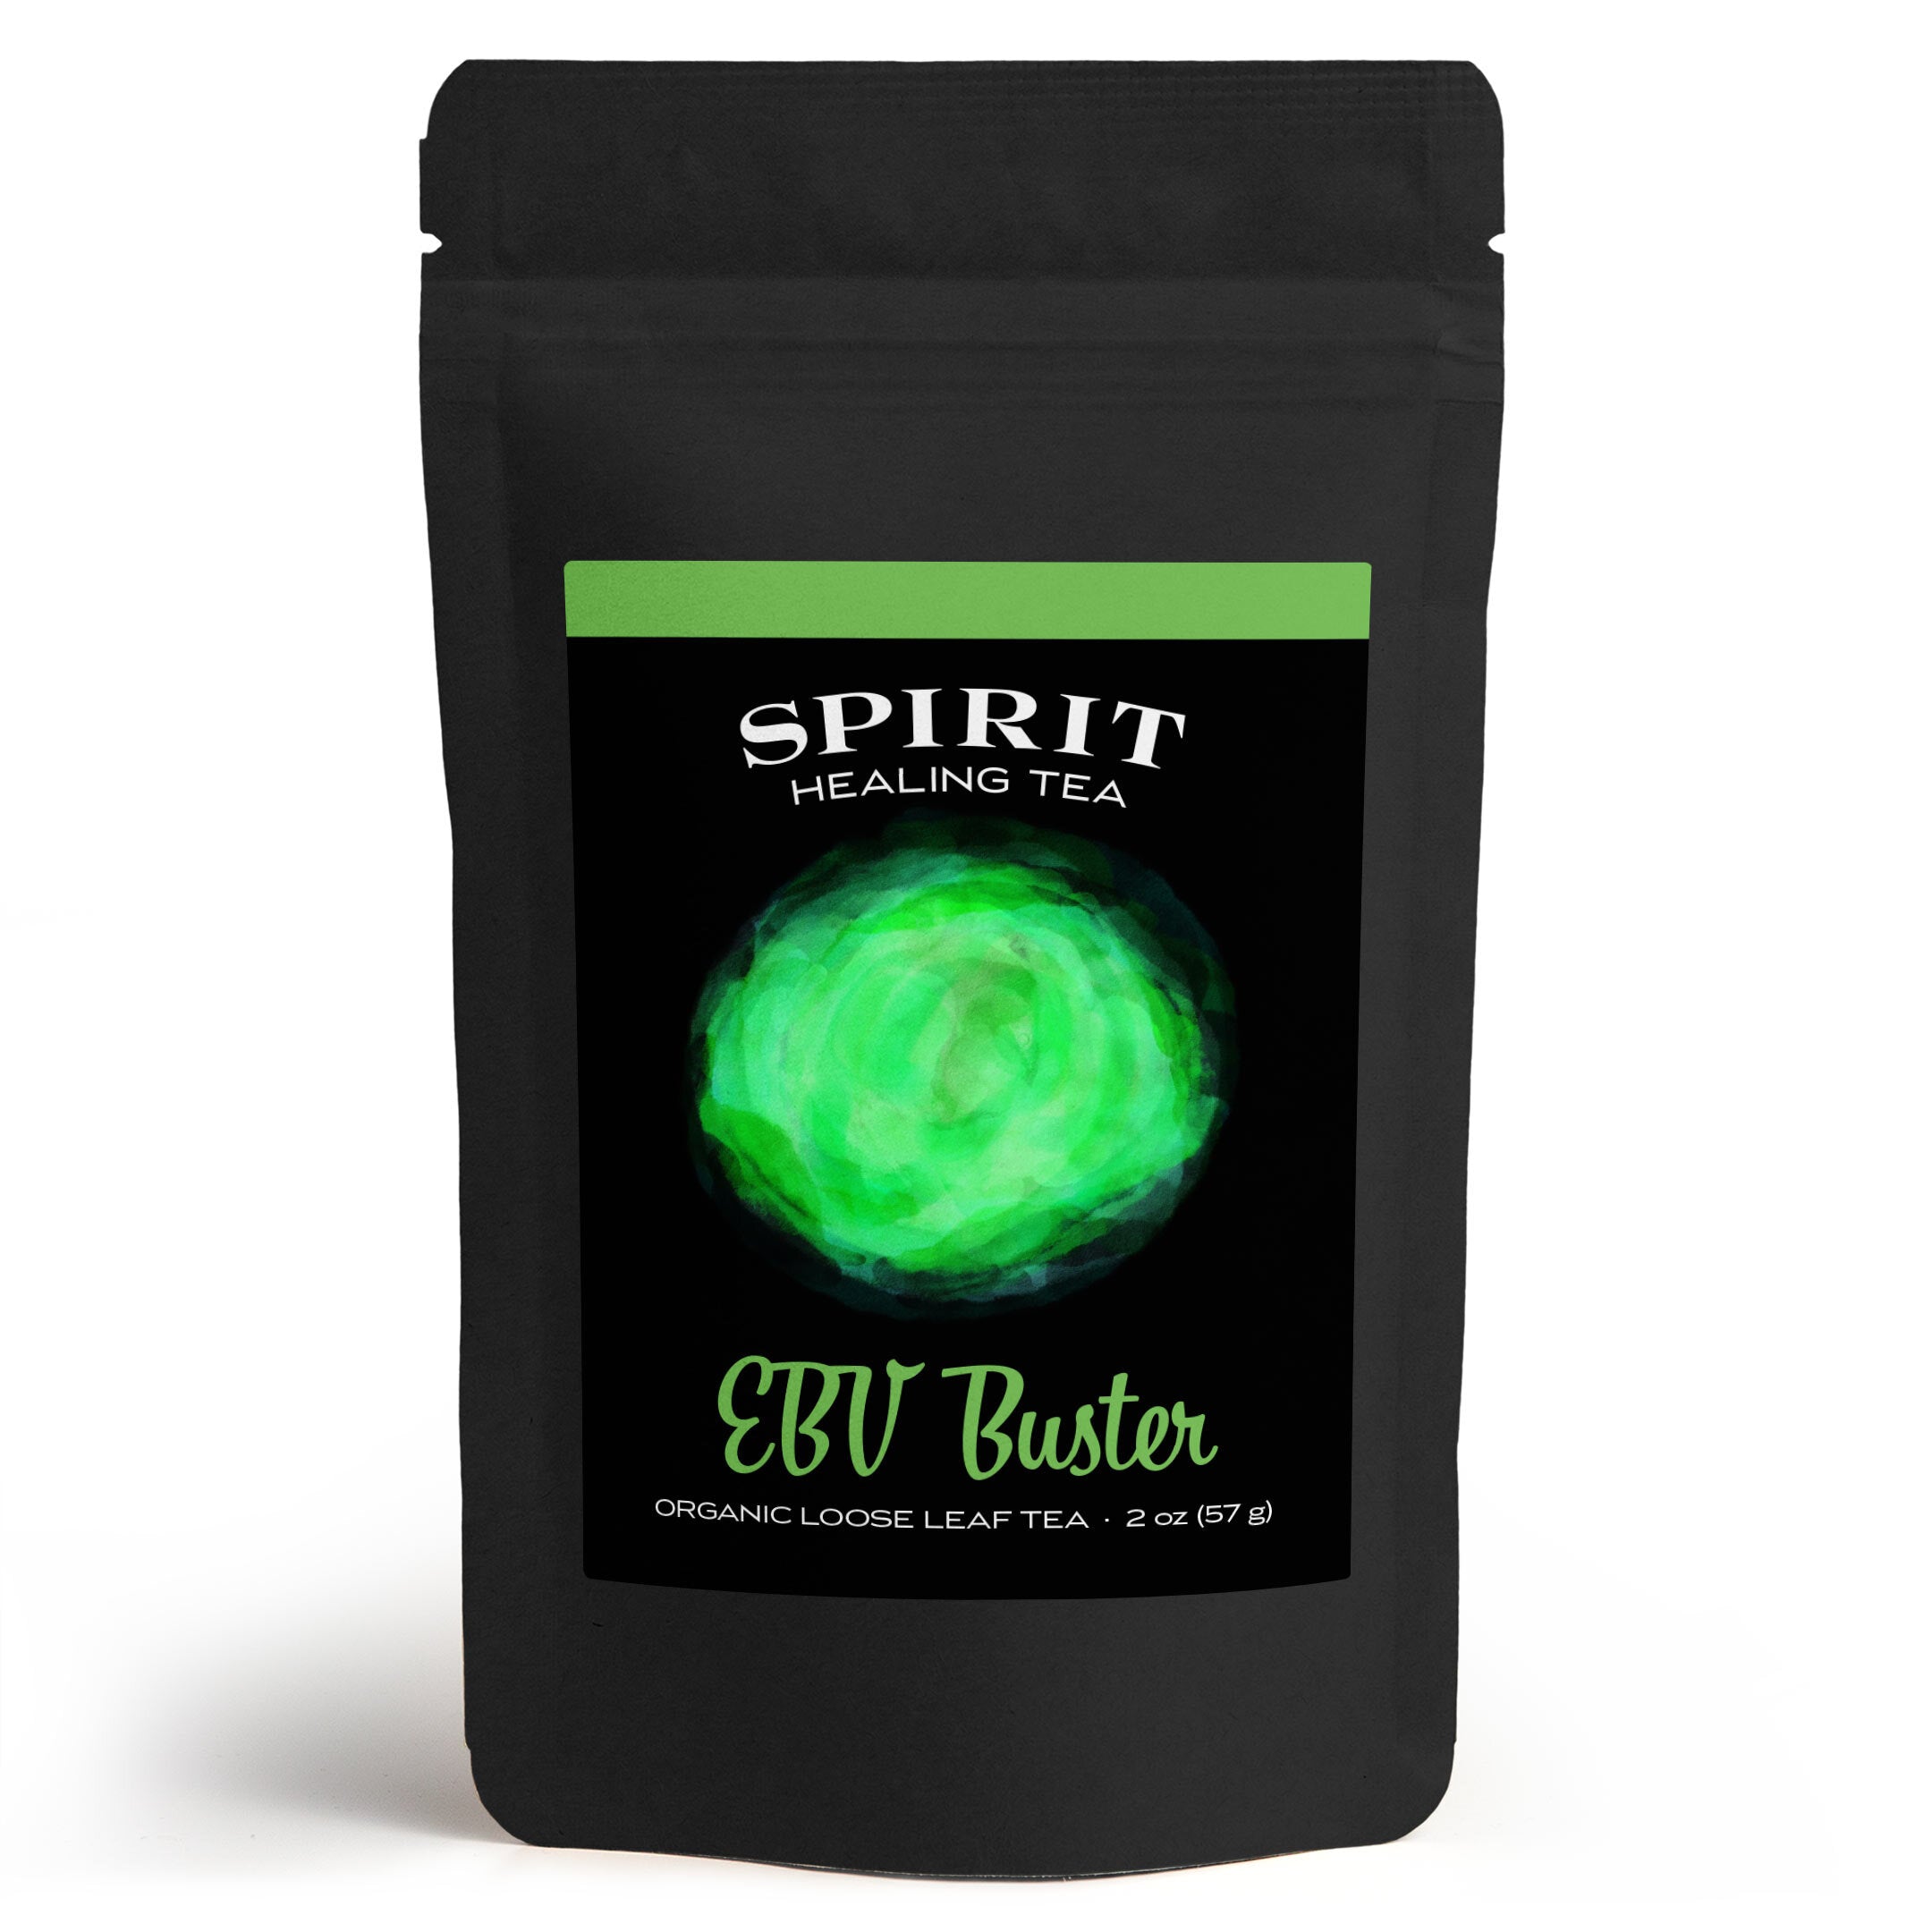 Spirit Healing EBV Buster Tea